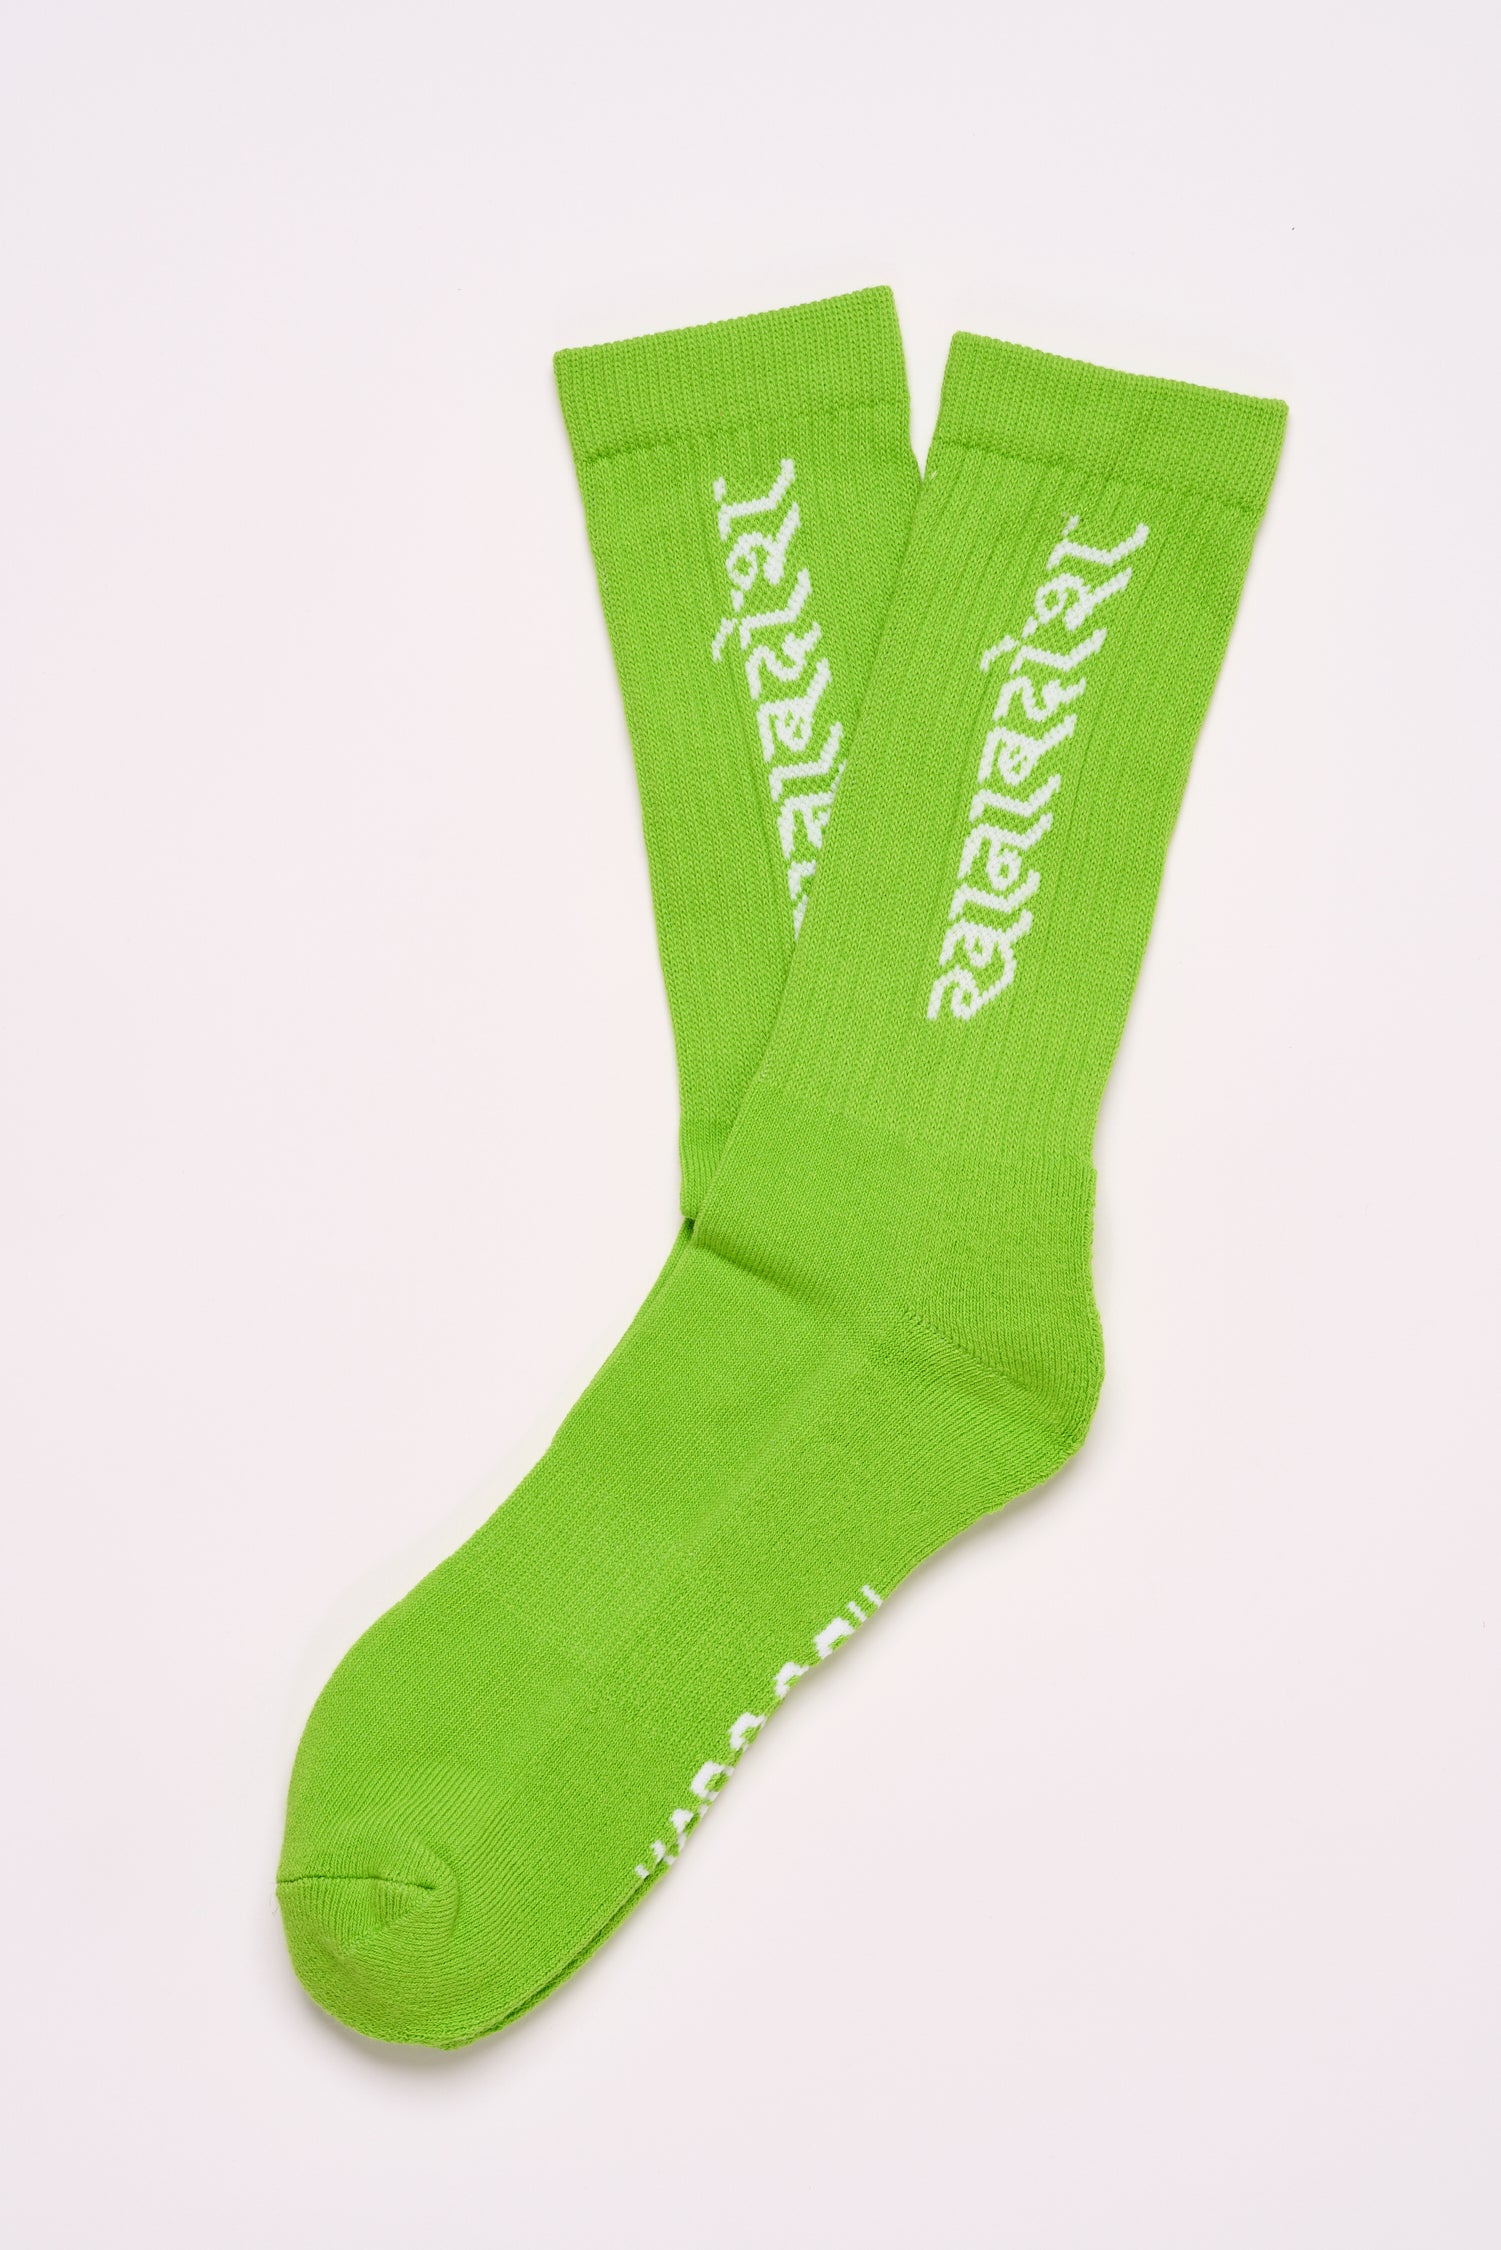 Socks - Hindi - Neon Green - One size - Unisex